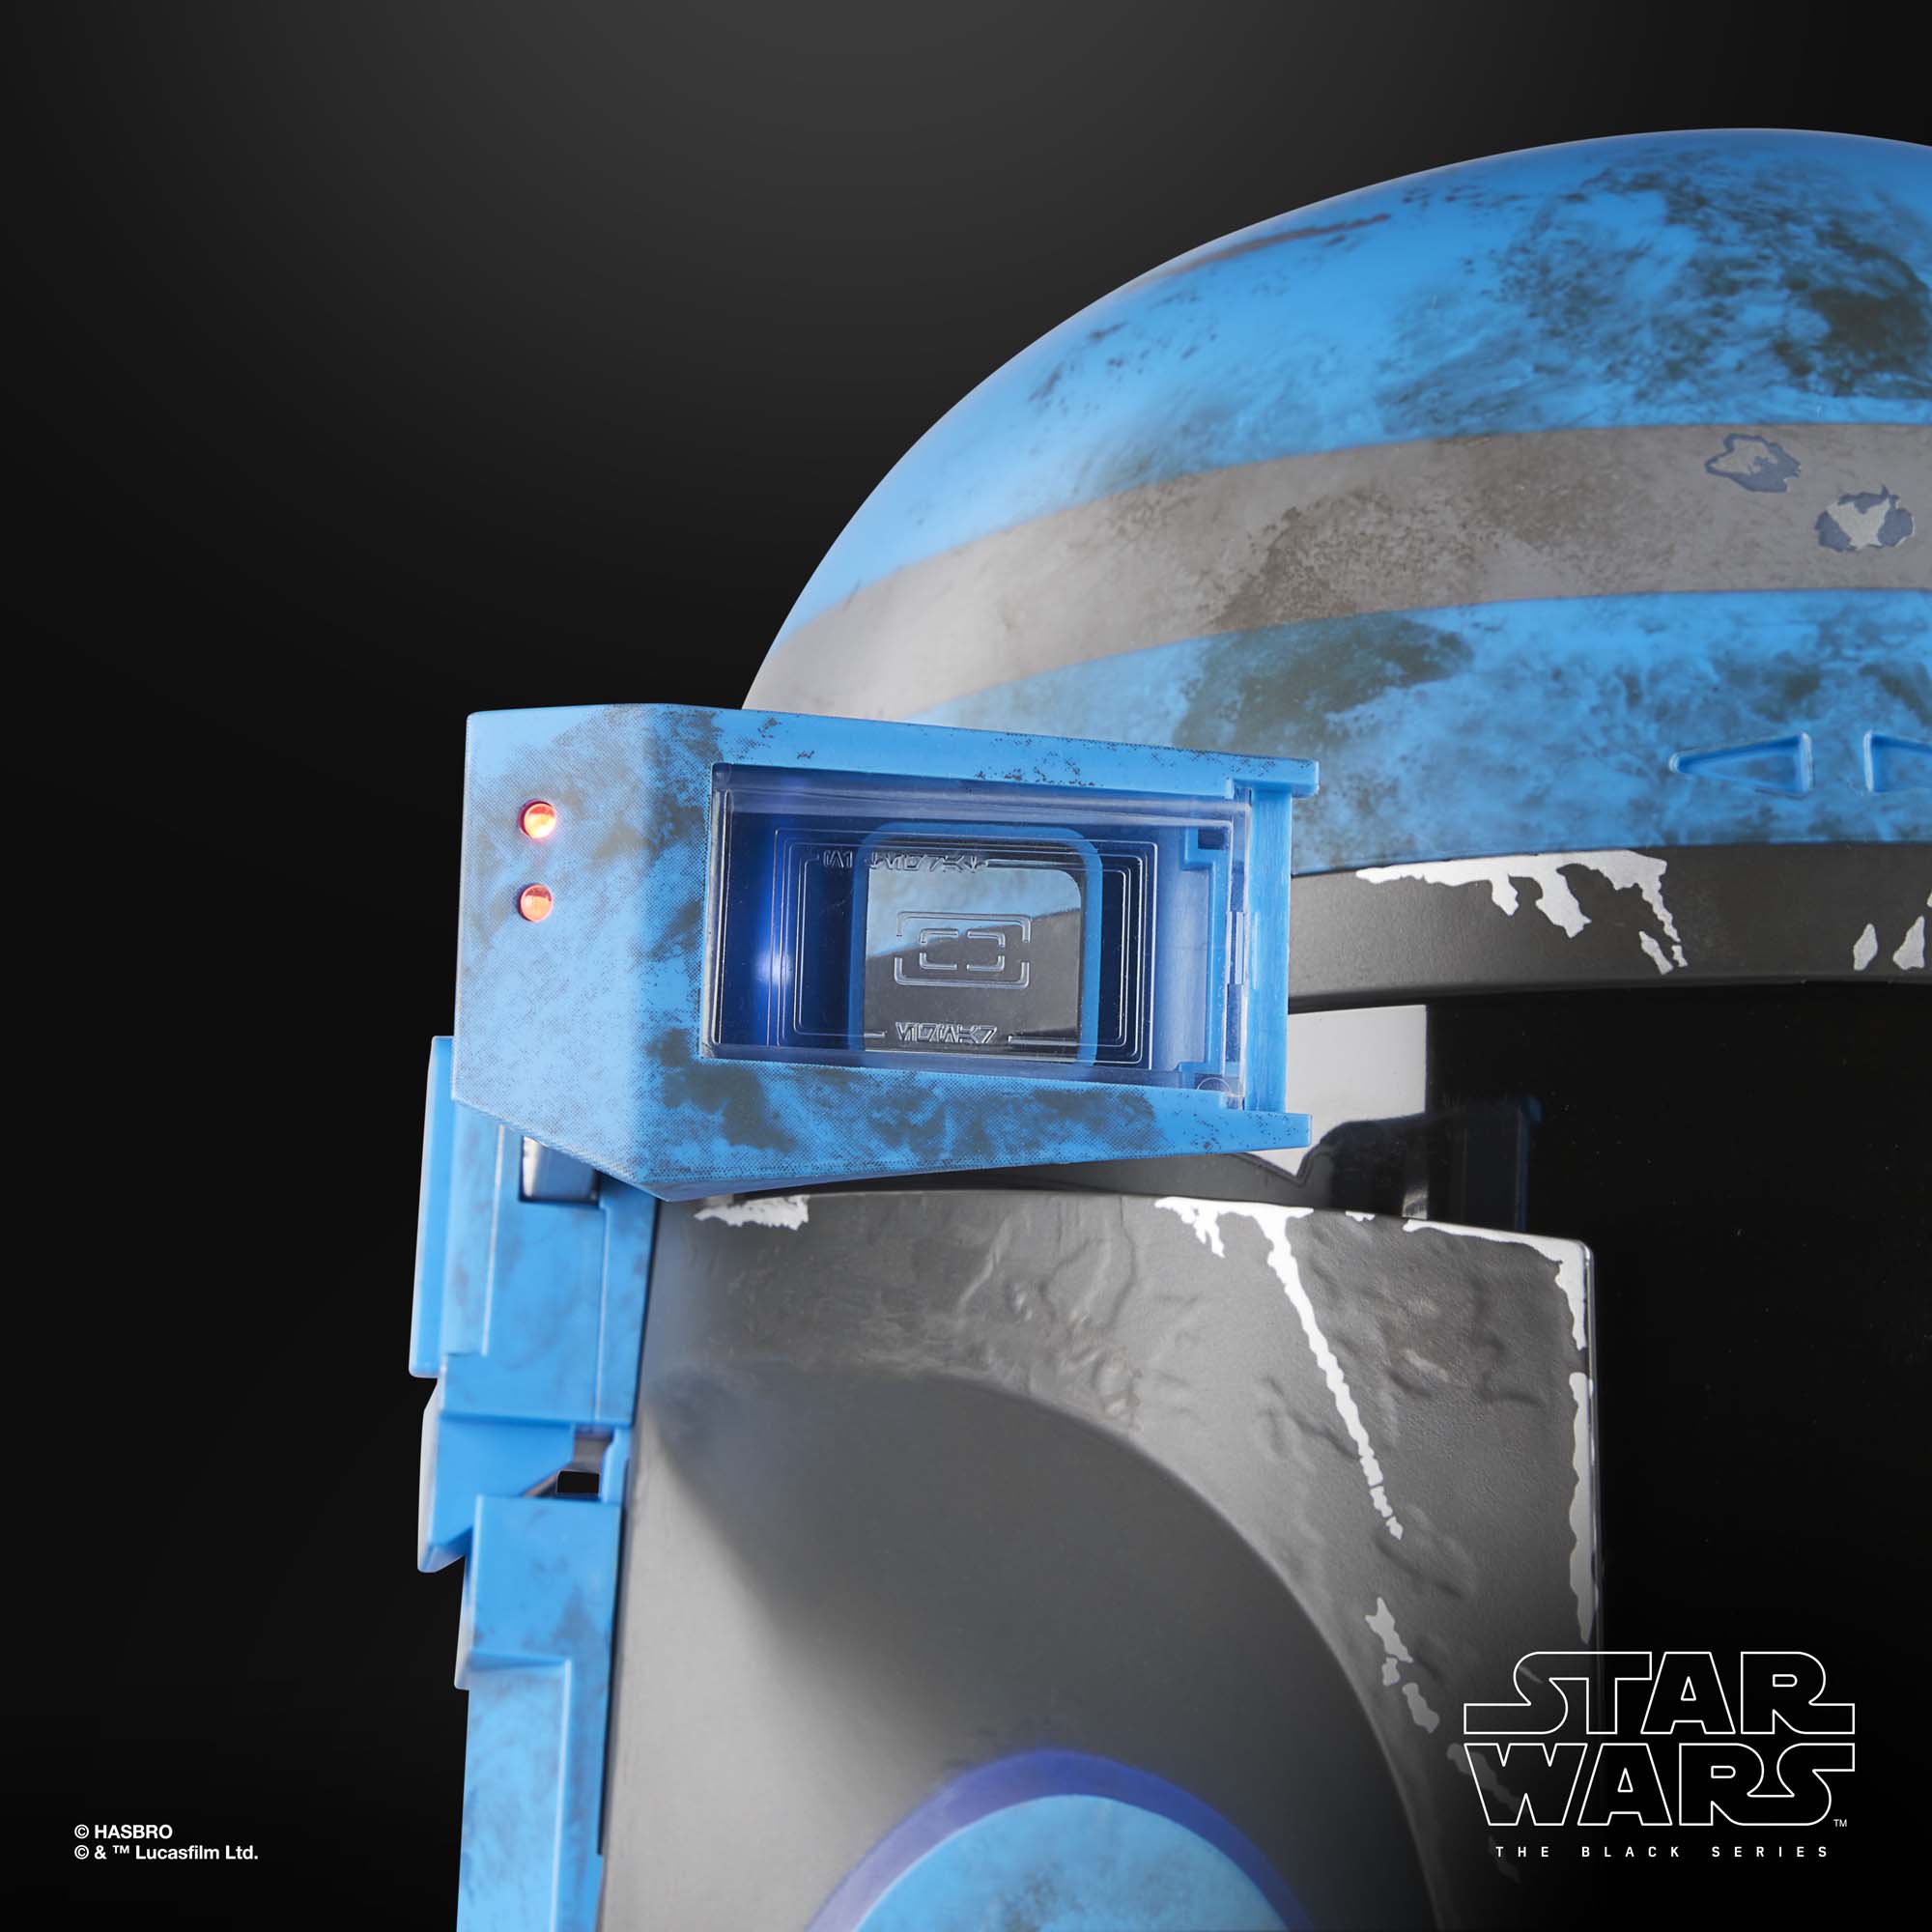 Star Wars The Black Series elektronischer Axe Woves Premium Helm  F76865L0 5010996126955